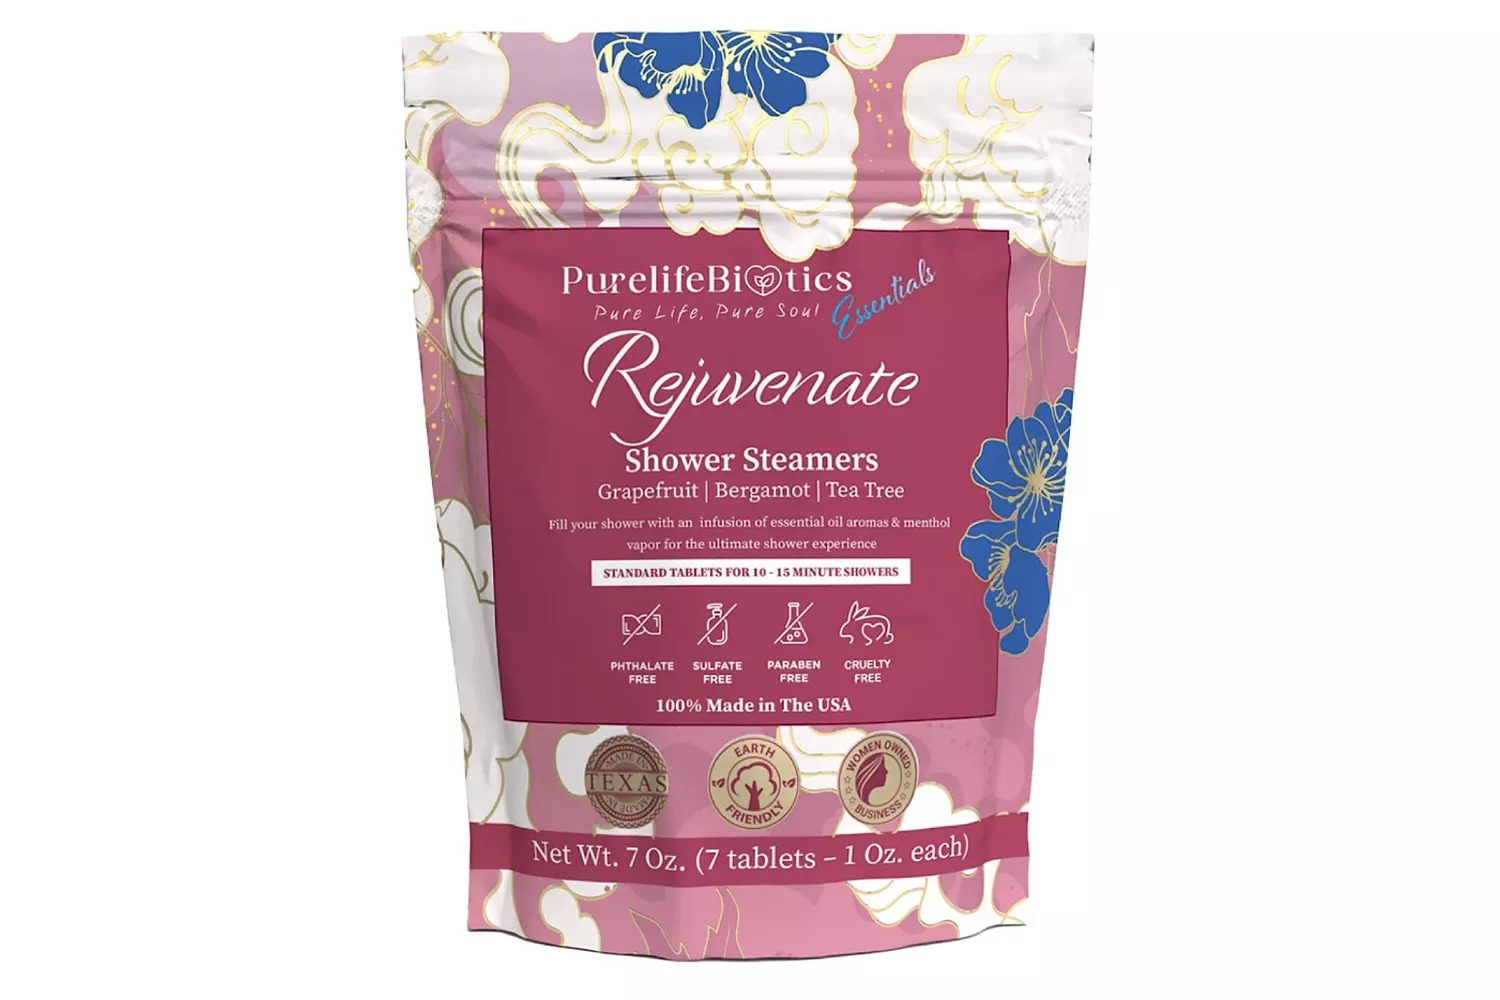 Purelifebiotics Rejuvenate Shower Steamers